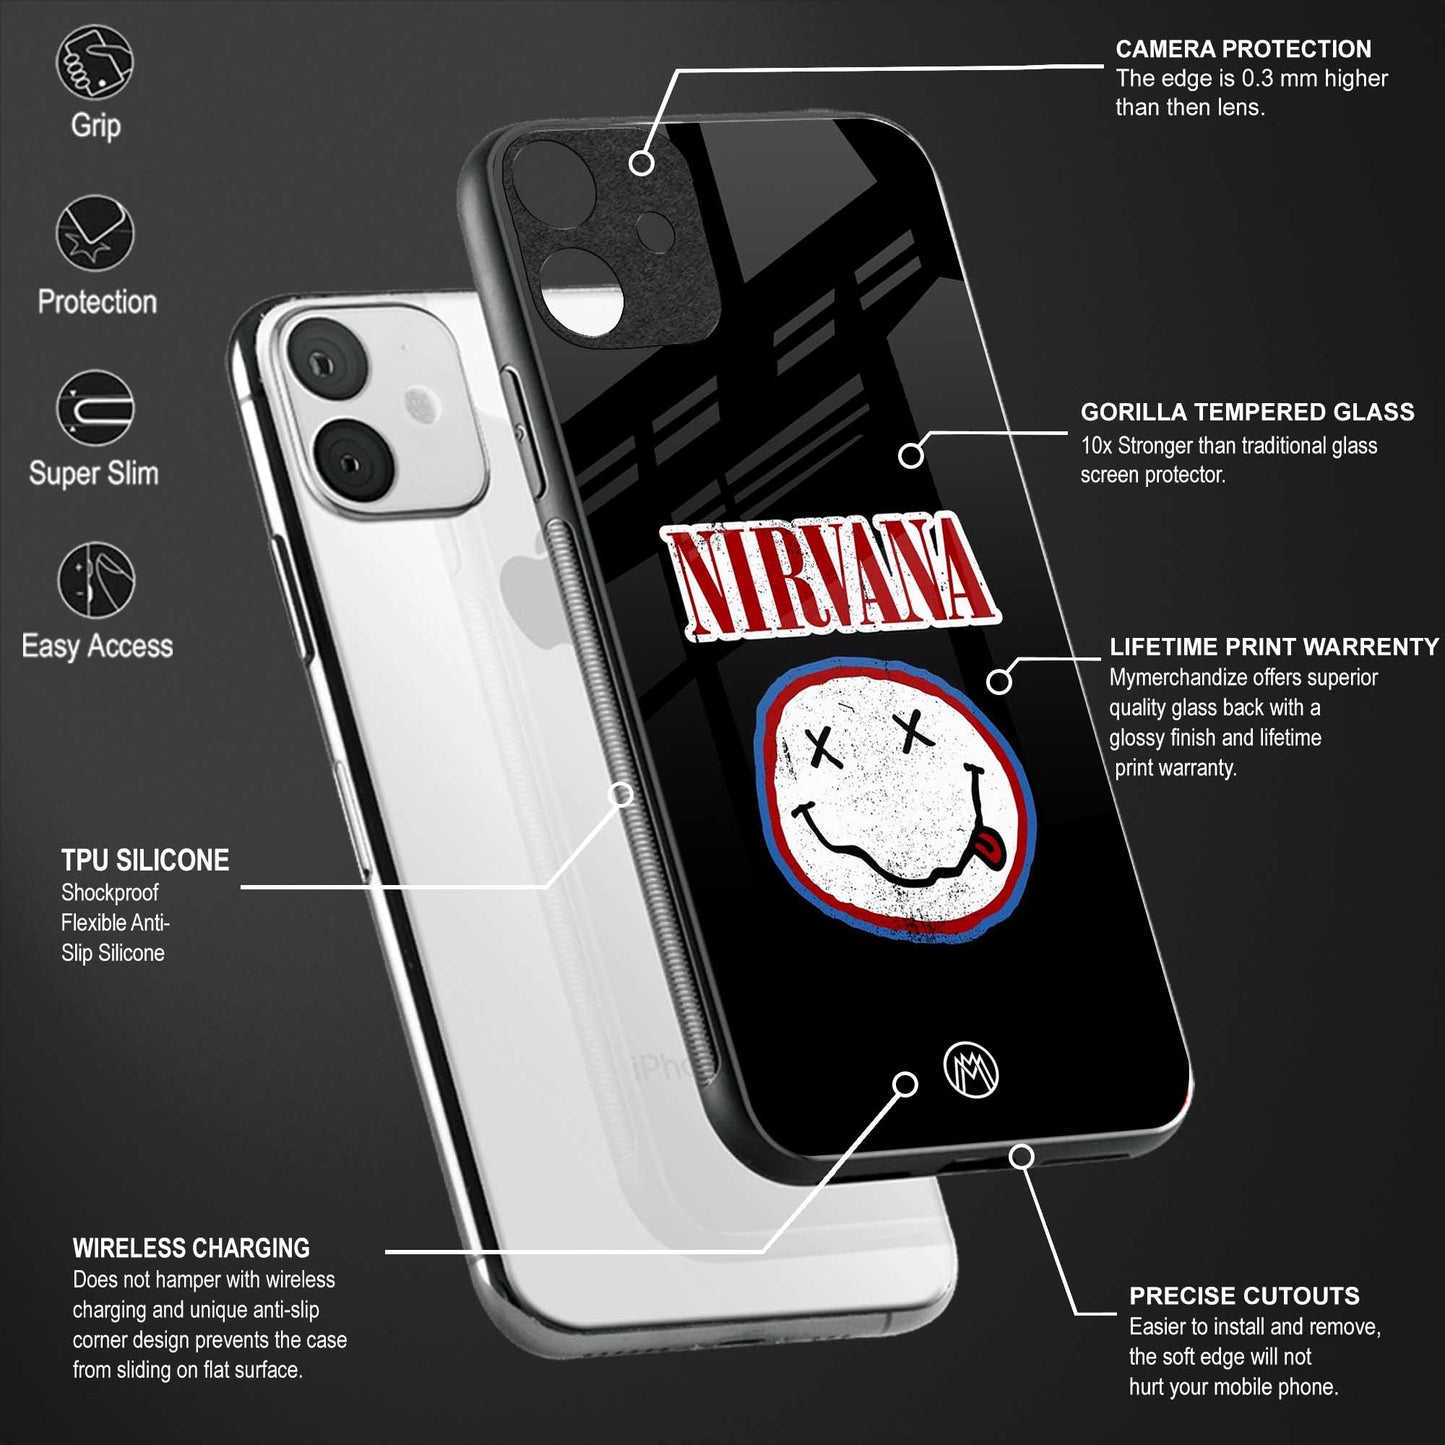 nirvana back phone cover | glass case for vivo y73